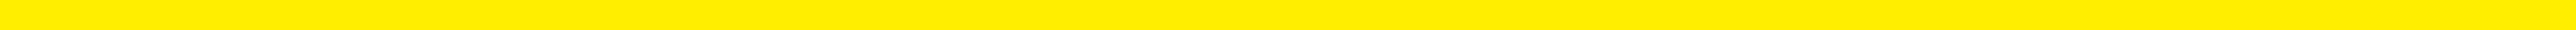 BD-branding-line-yellow - 3